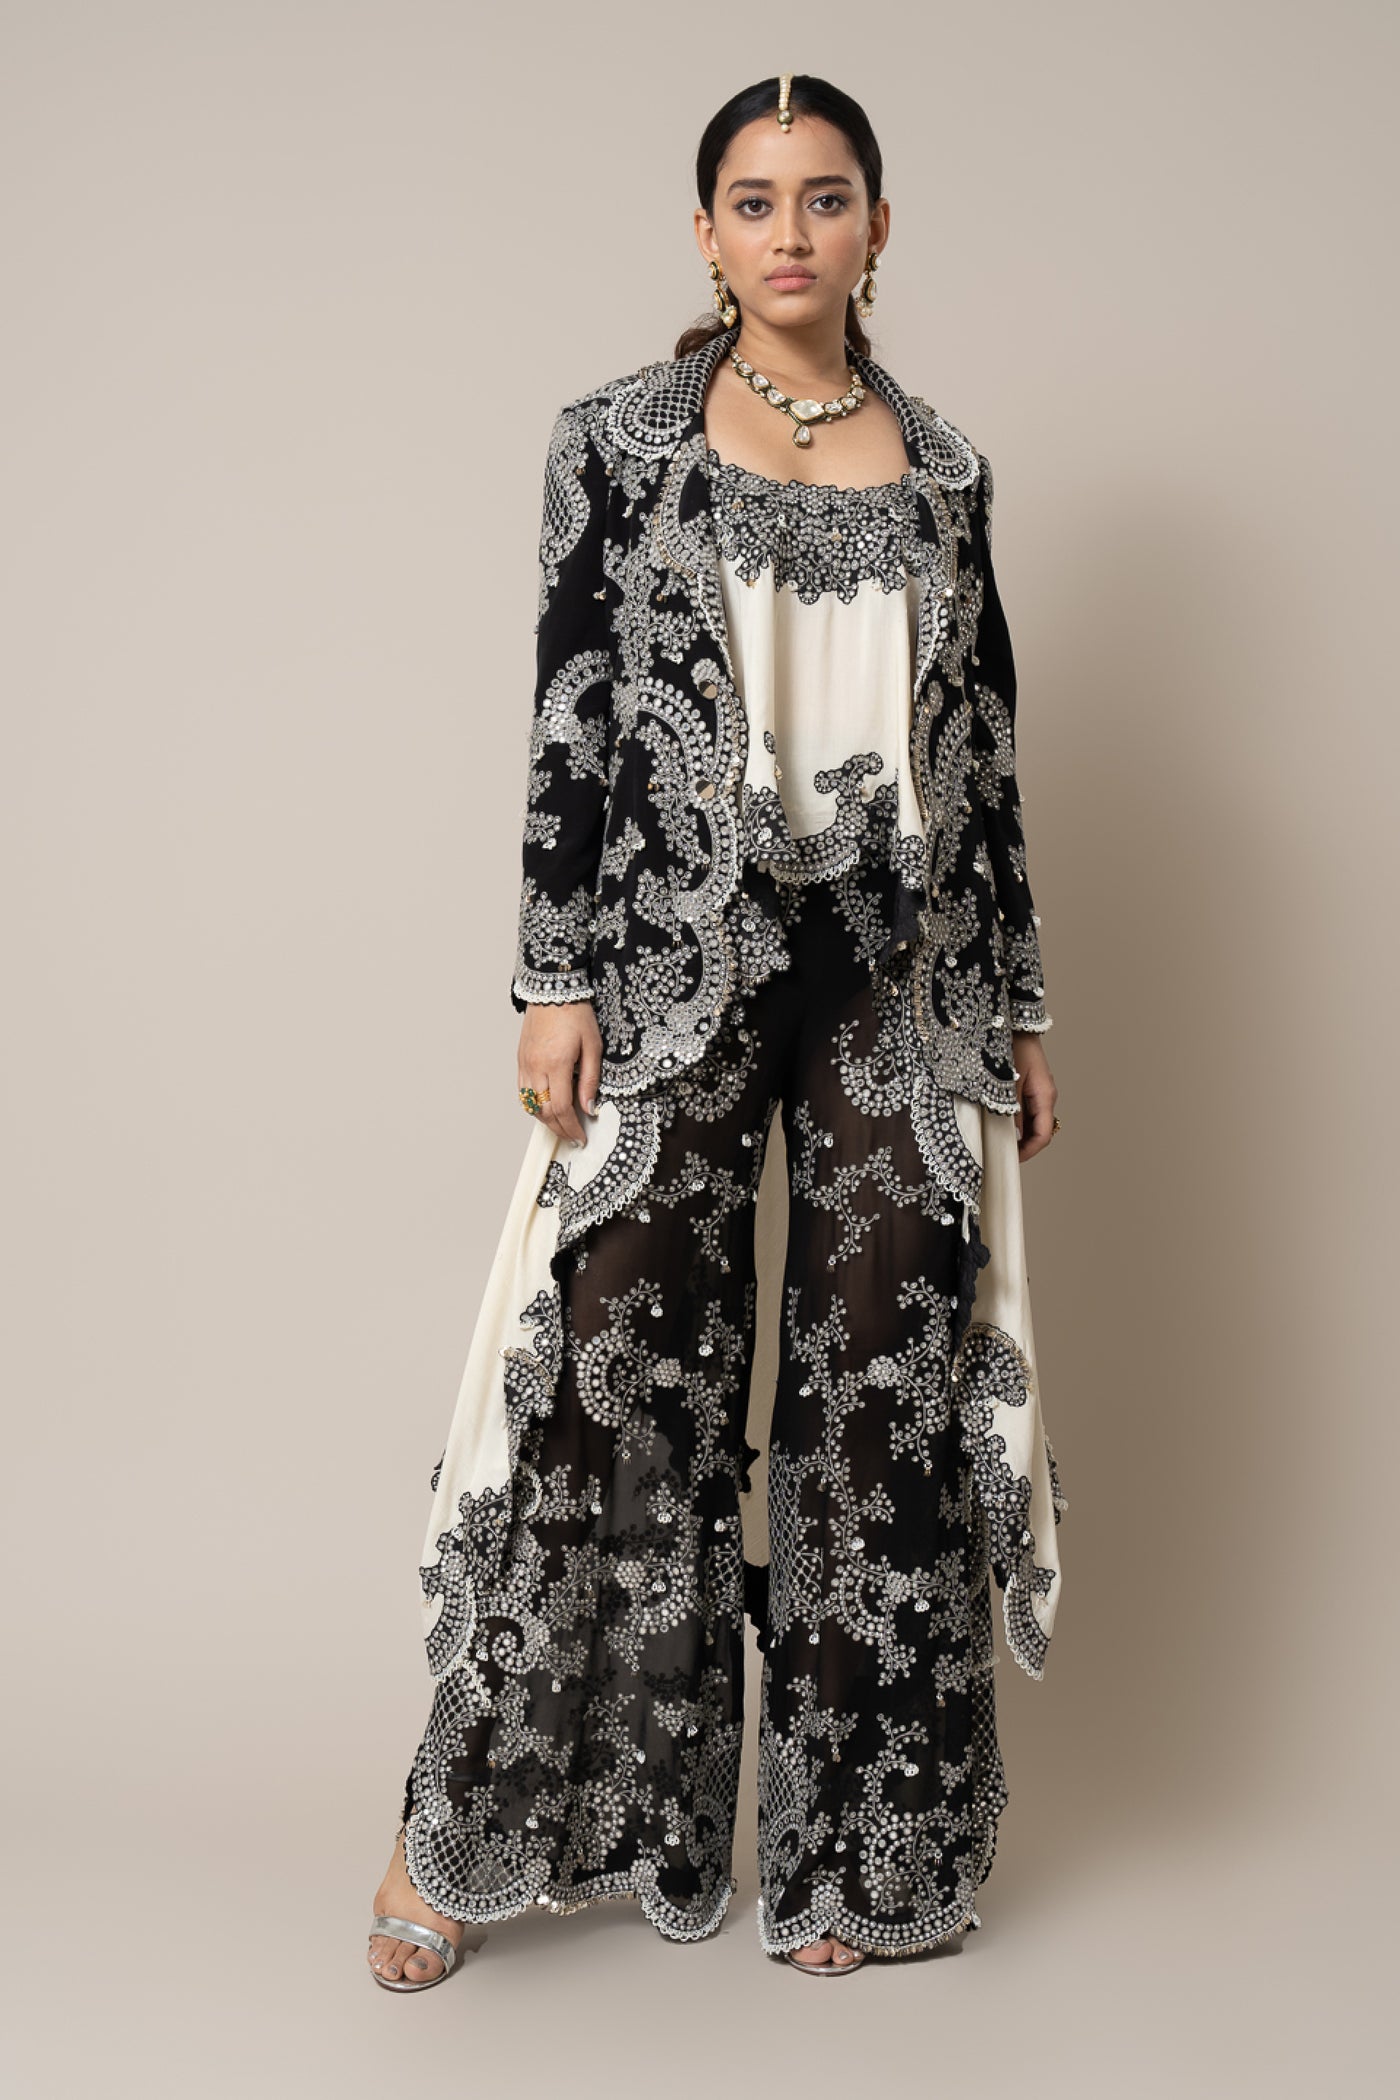 Nupur Kanoi Blazer Set Black And Off-white indian designer wear online shopping melange singapore